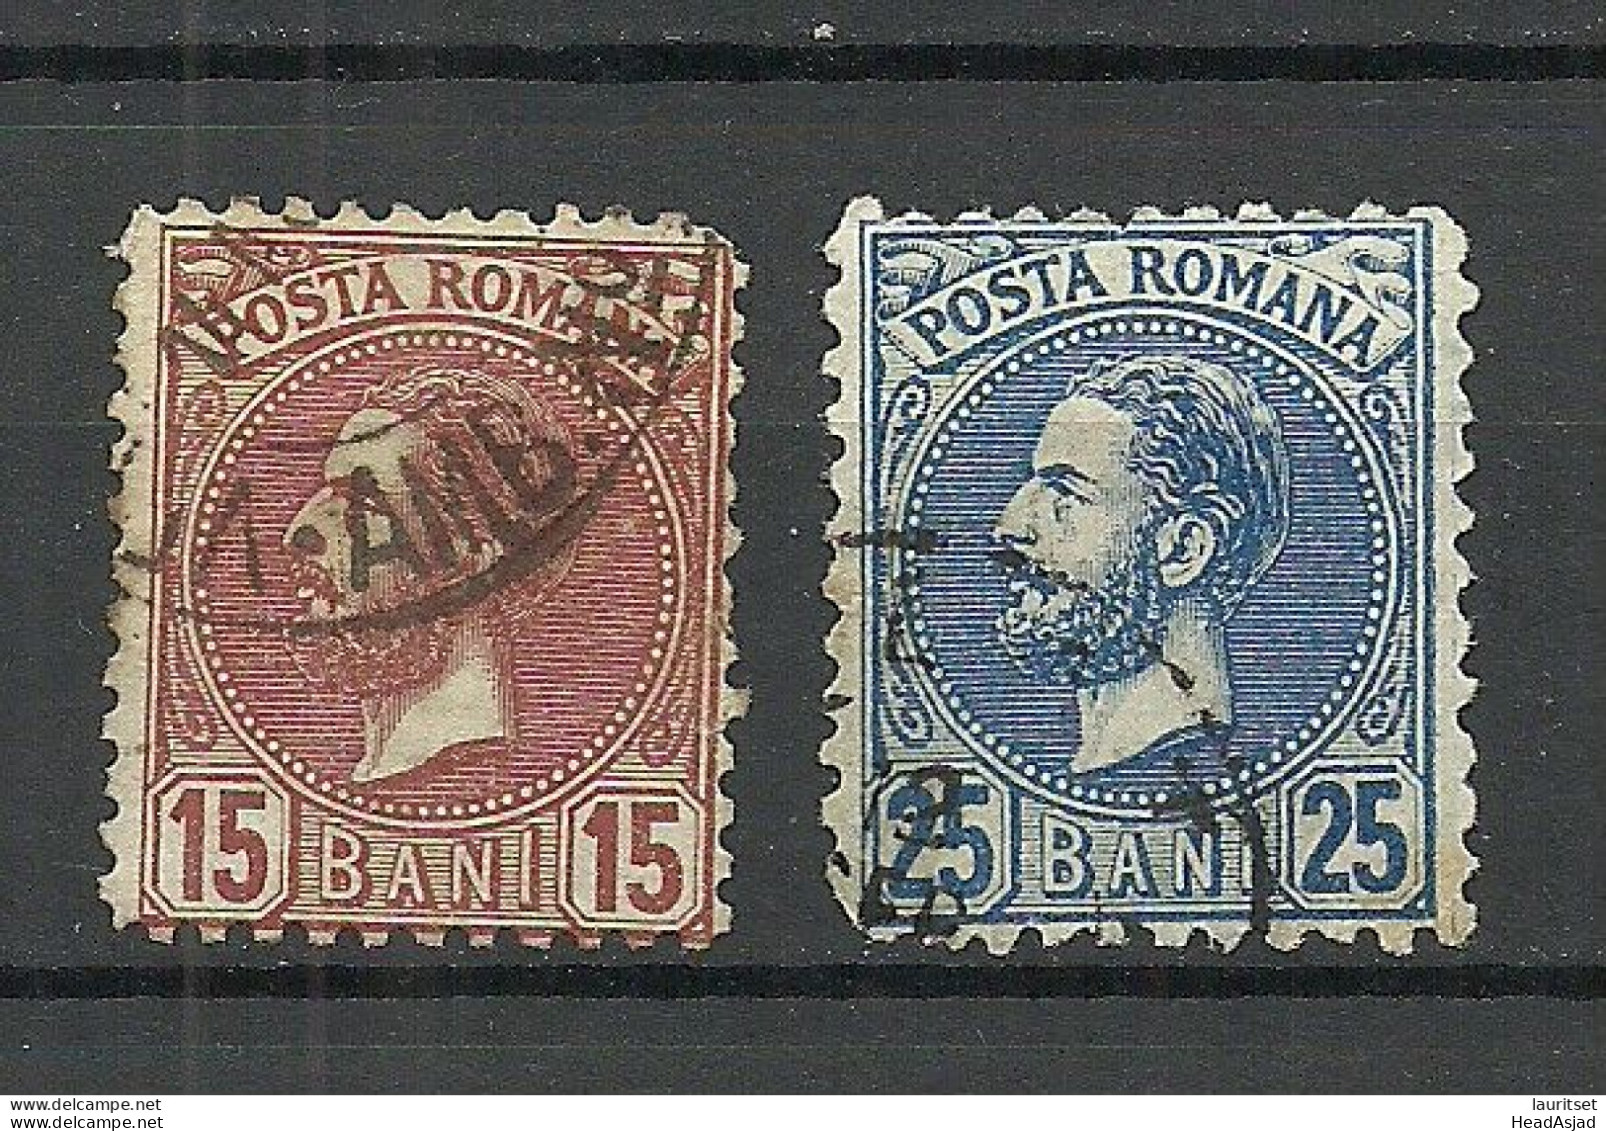 ROMANIA Rumänien 1880 Michel 55 - 56 O - 1858-1880 Moldavie & Principauté